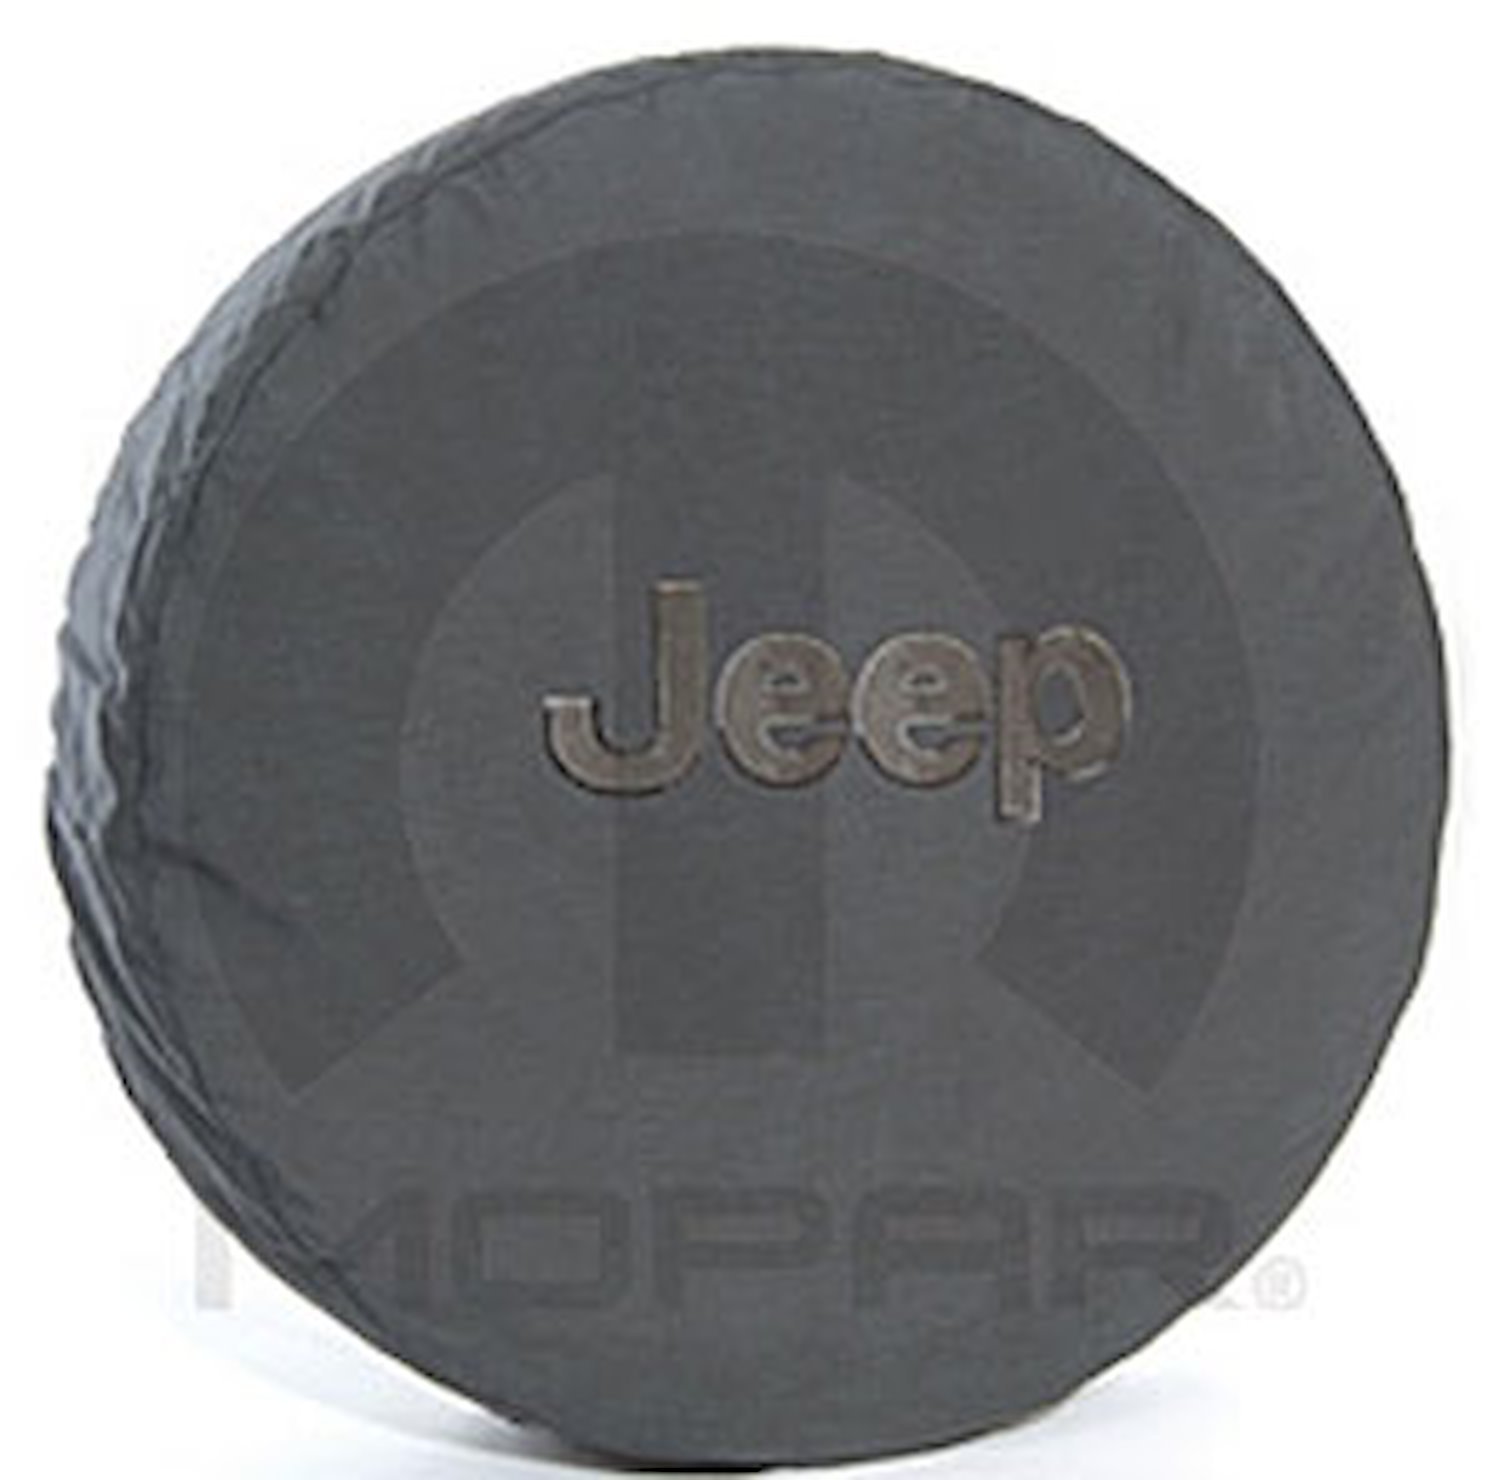 Spare Tire Cover - Deluxe Anti-Theft 2007-13 Jeep Wrangler 2/4-Door